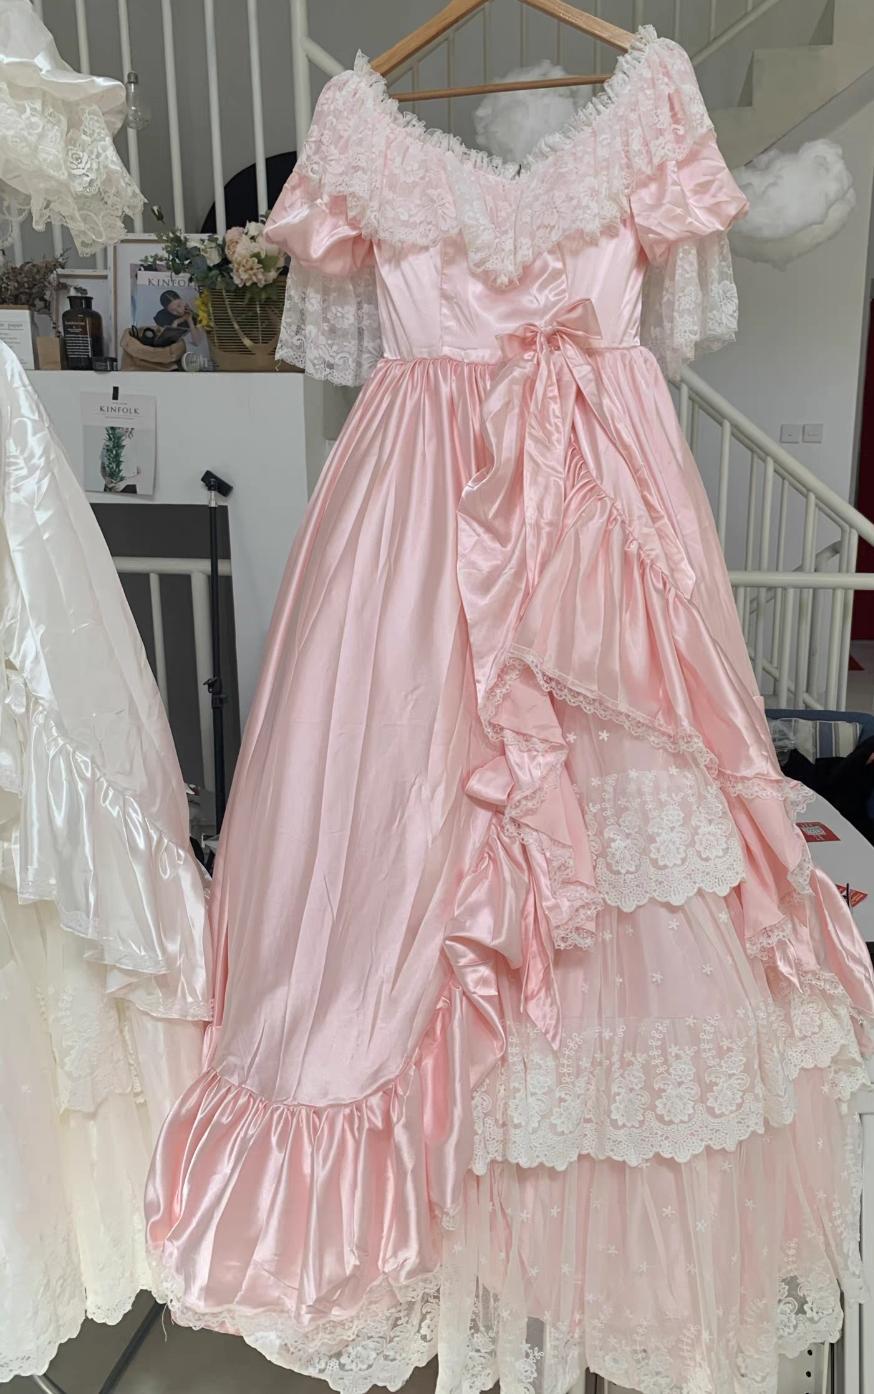 Lilac Pink Dress - Cutout Maxi Dress - Backless Maxi Dress - Lulus